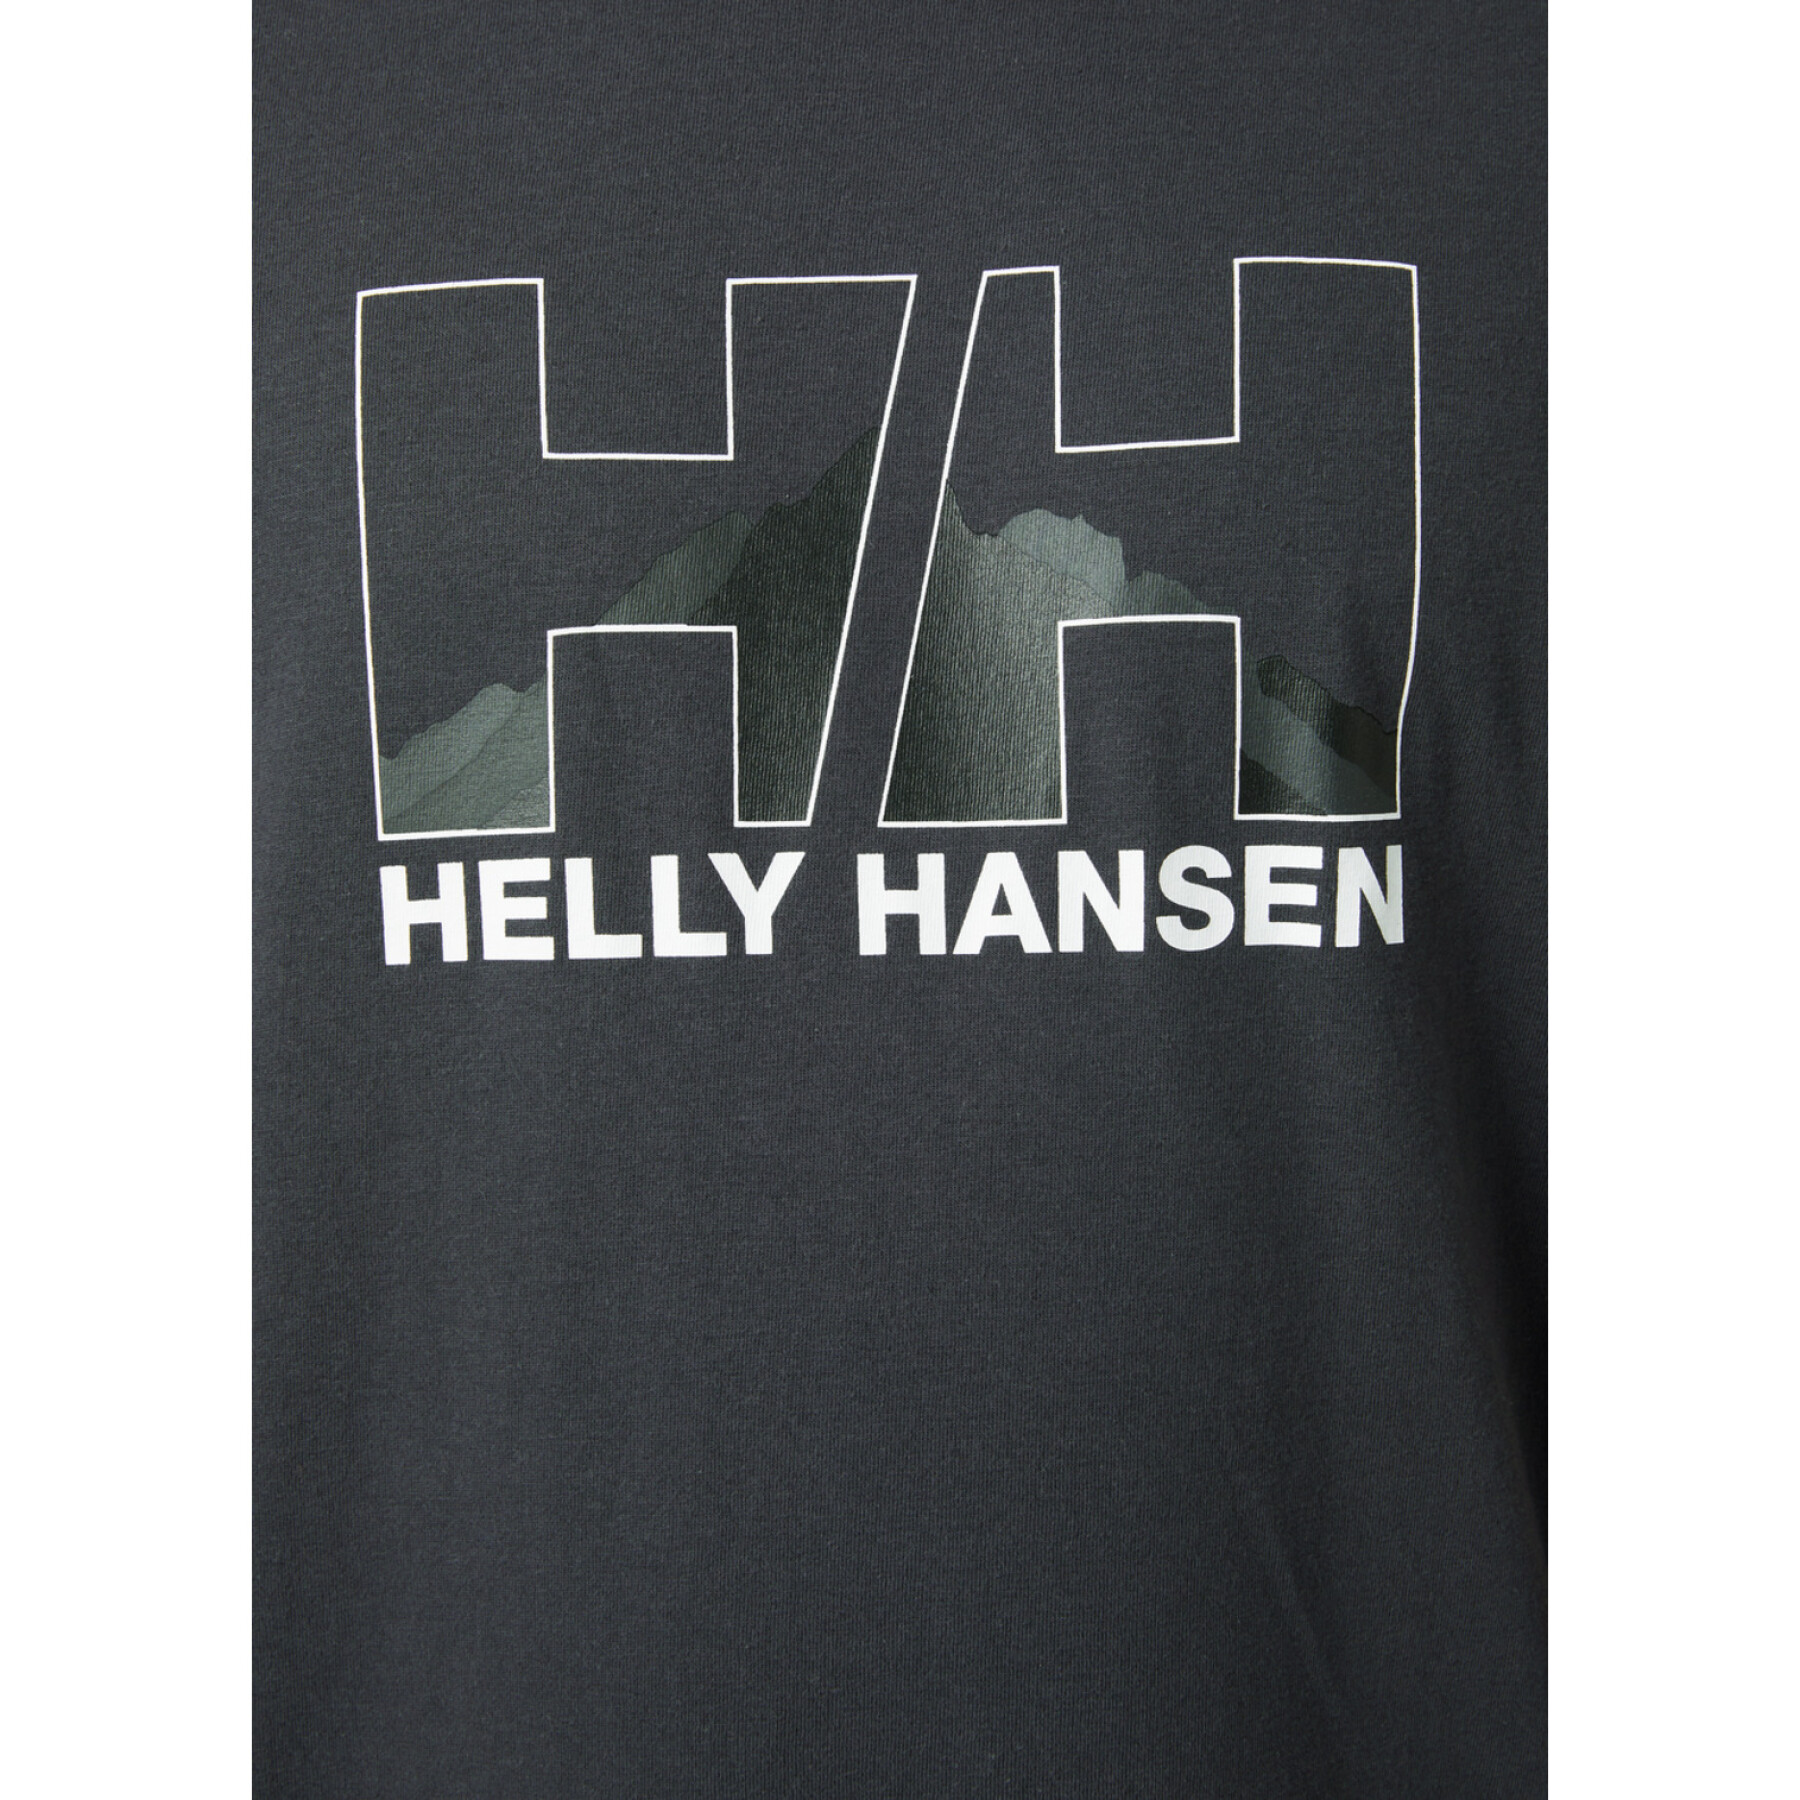 Koszulka Helly Hansen Nord graphic